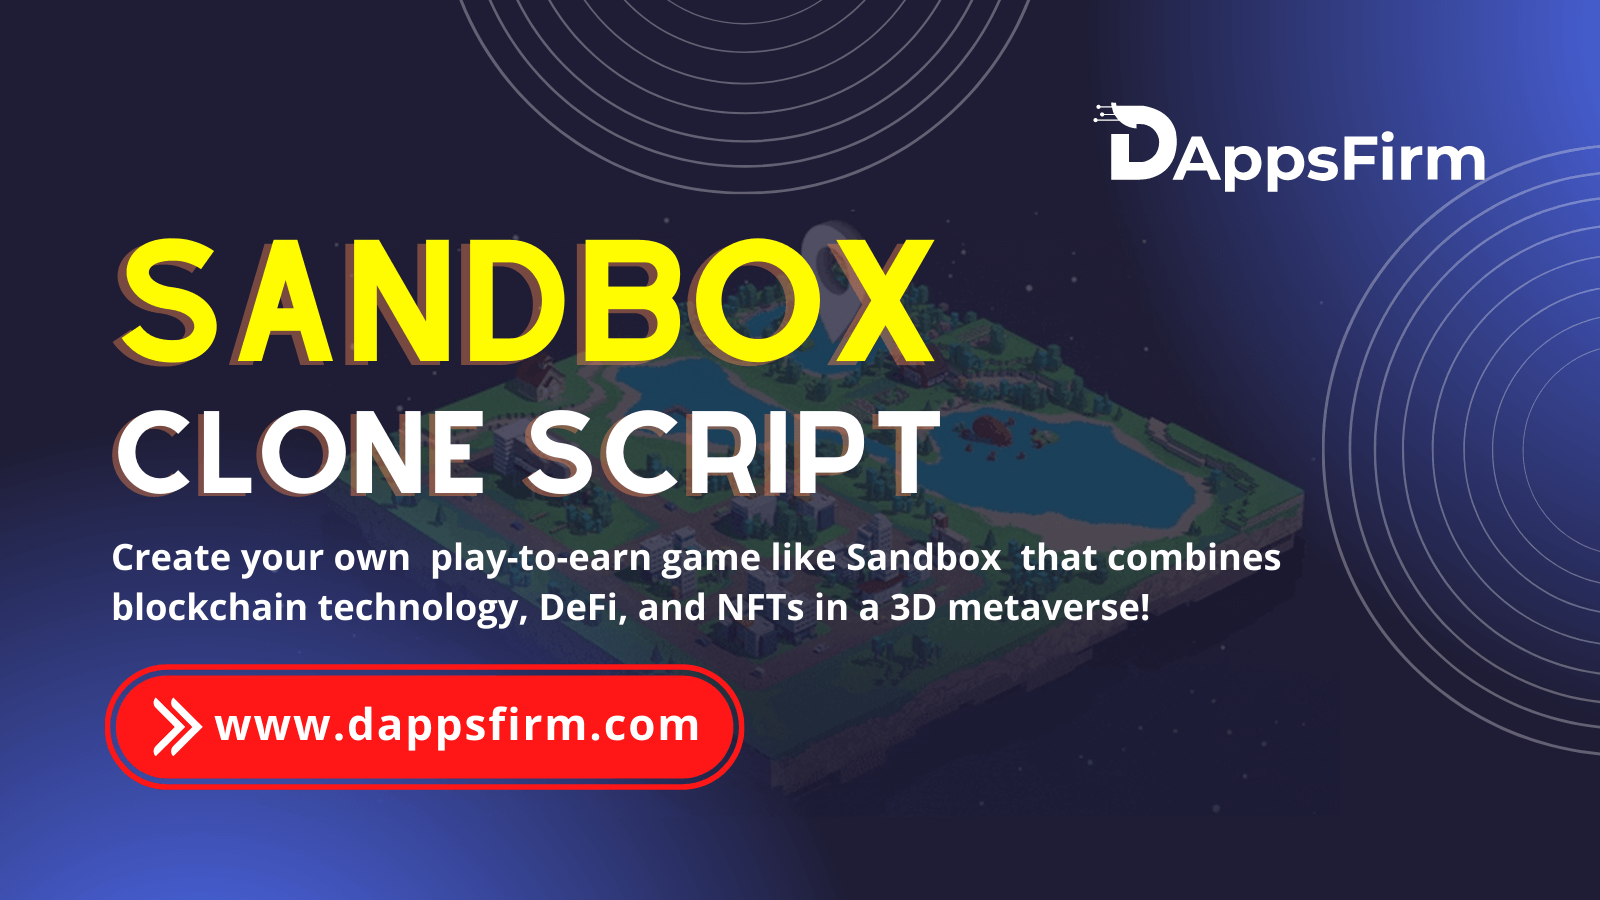 Sandbox Clone Script To Launch Your Own 3D Metaverse NFT Gaming Platform